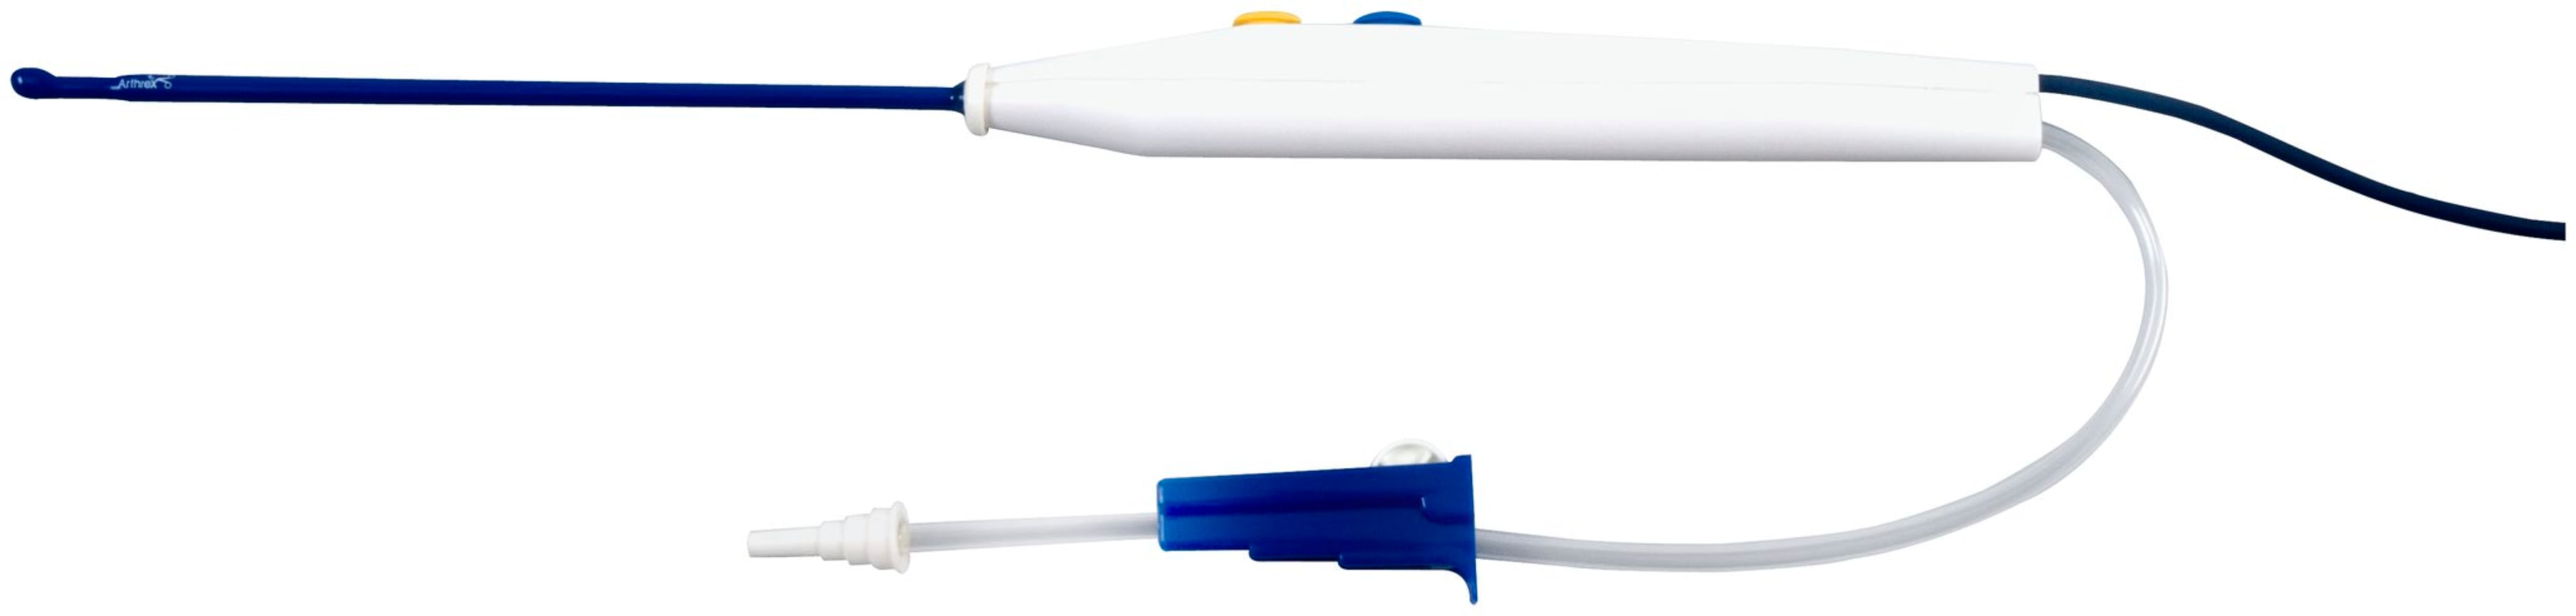 OPES Ablator mit Saugung, Toothbrush, 90°, Low-Profil